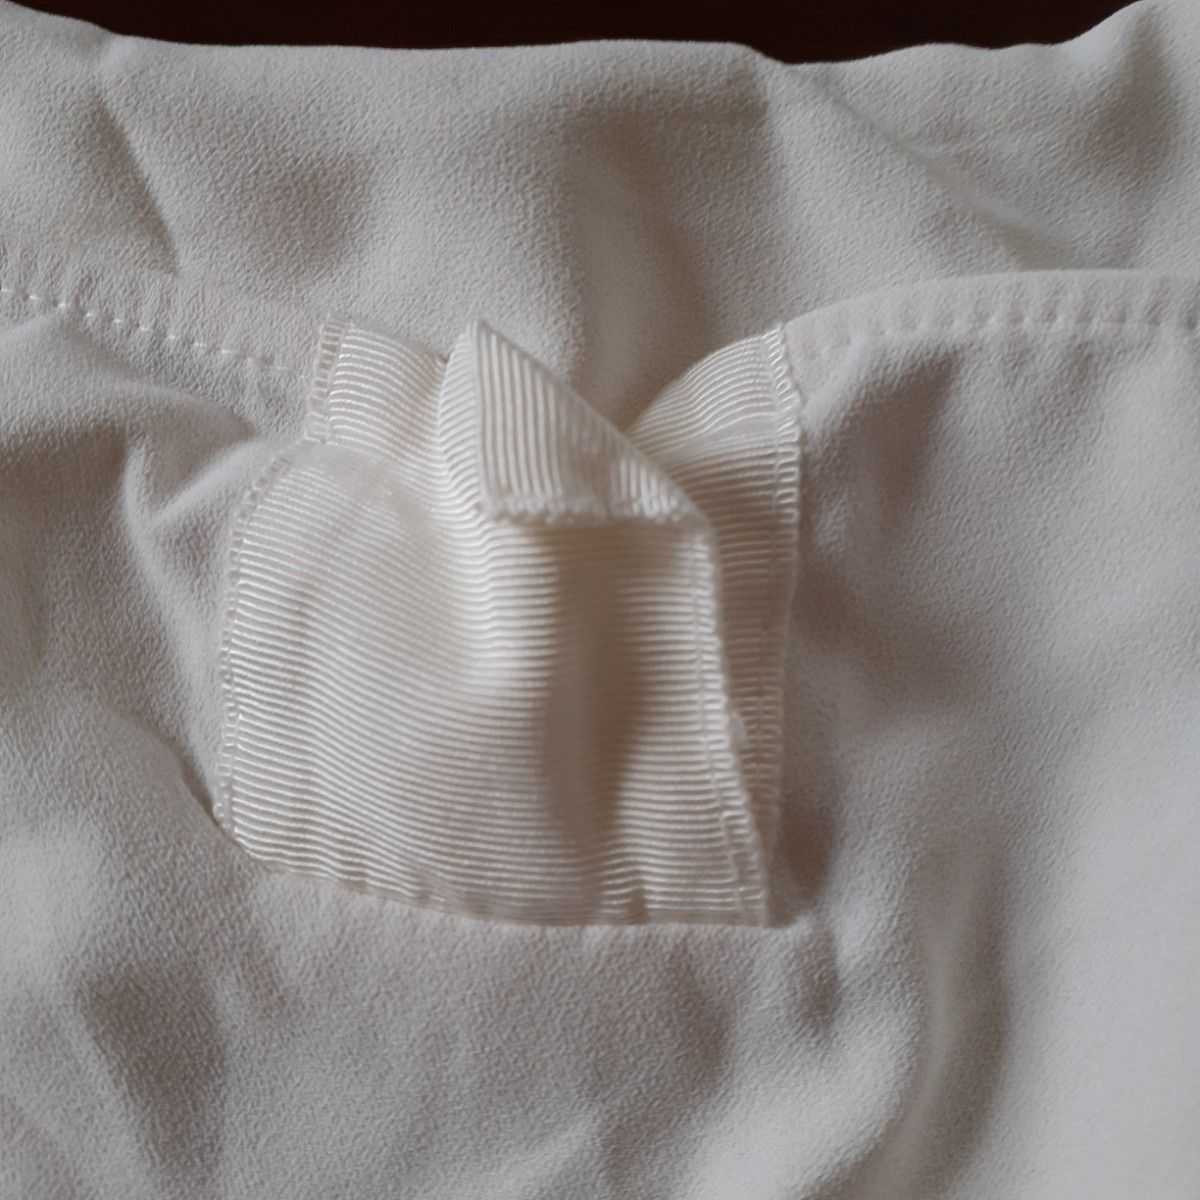 F natural fabric トップス シャツ ブラウス 白 無地 エフ 長袖 ブラウス シャツ ホワイト Vネック